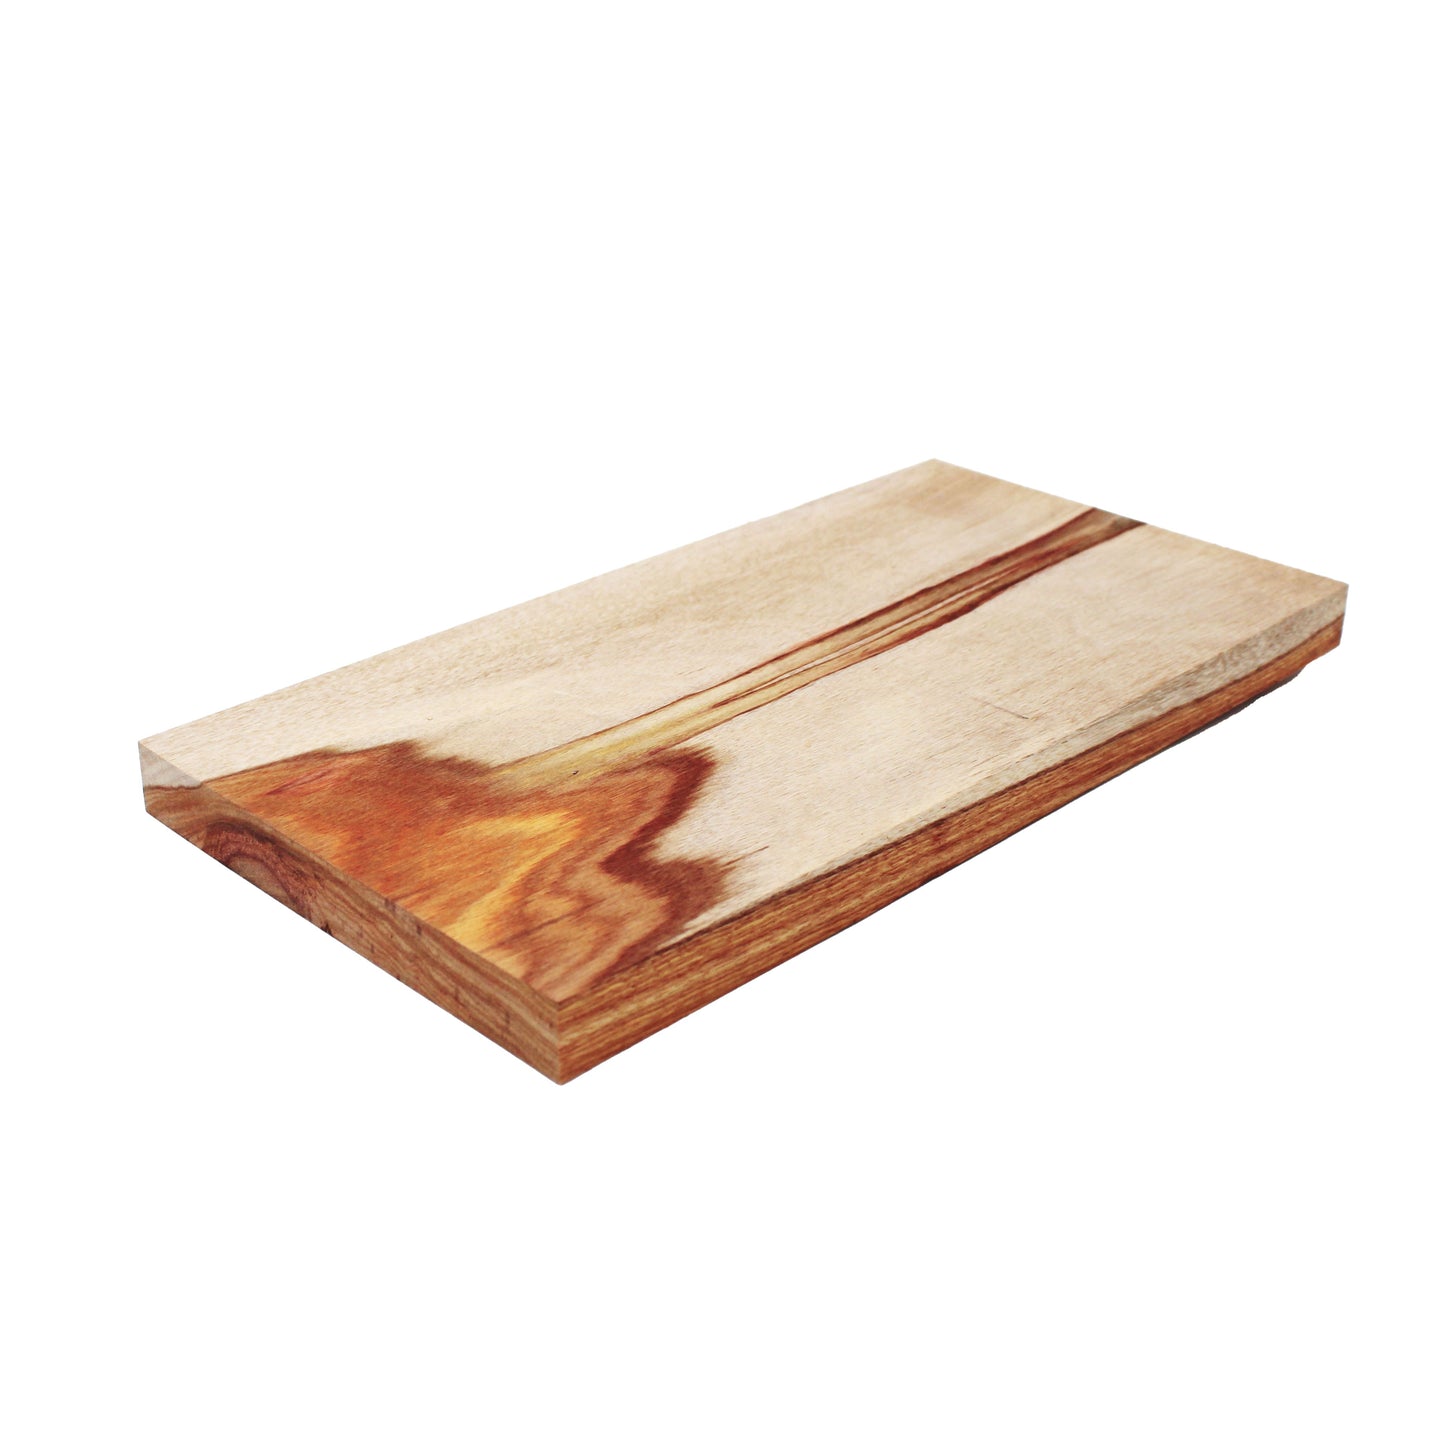 Canarywood Lumber Boards 3/4" x 6" (2pcs)